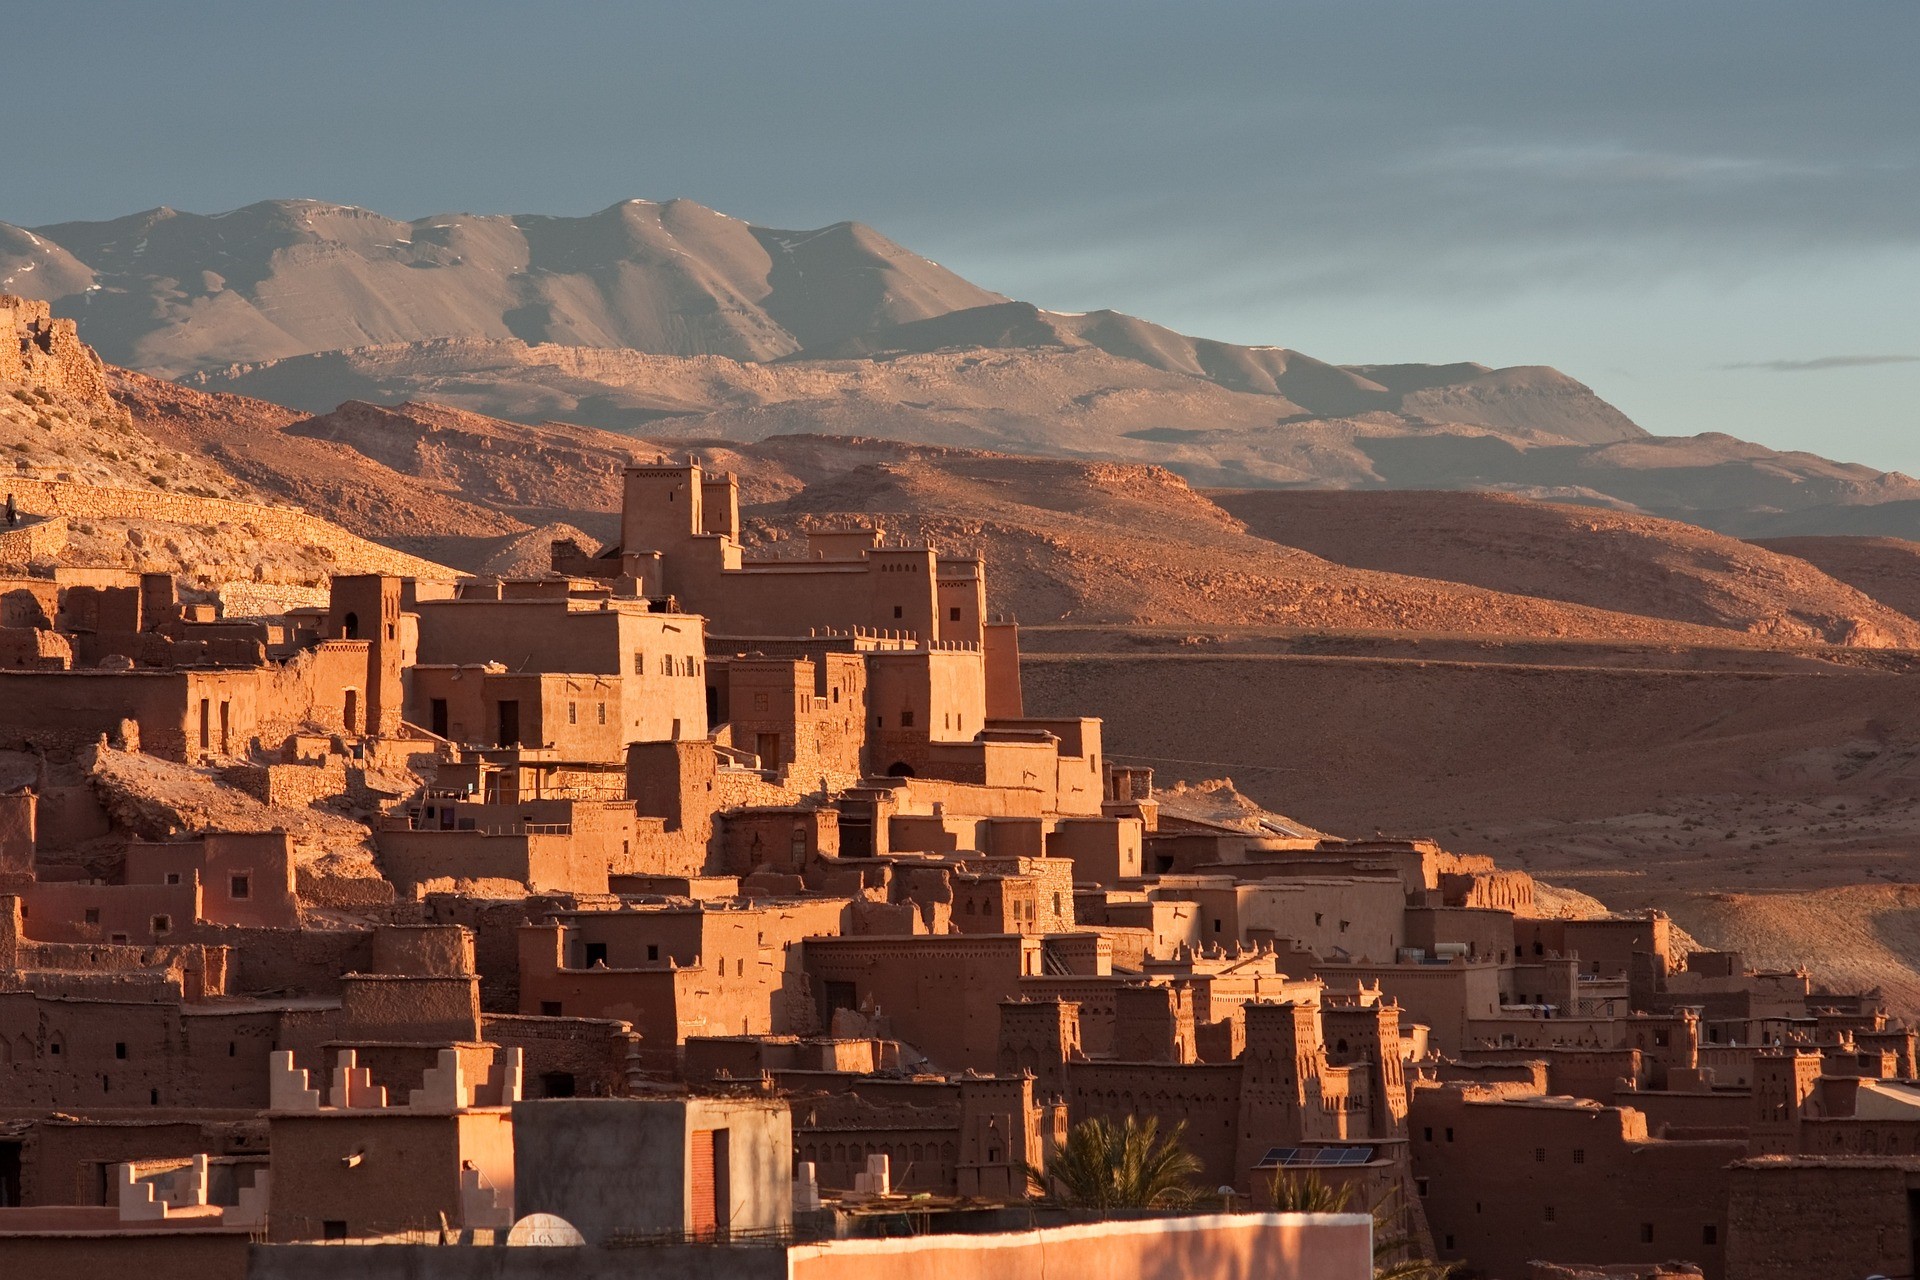 Fes to Marrakech 3 days desert tour